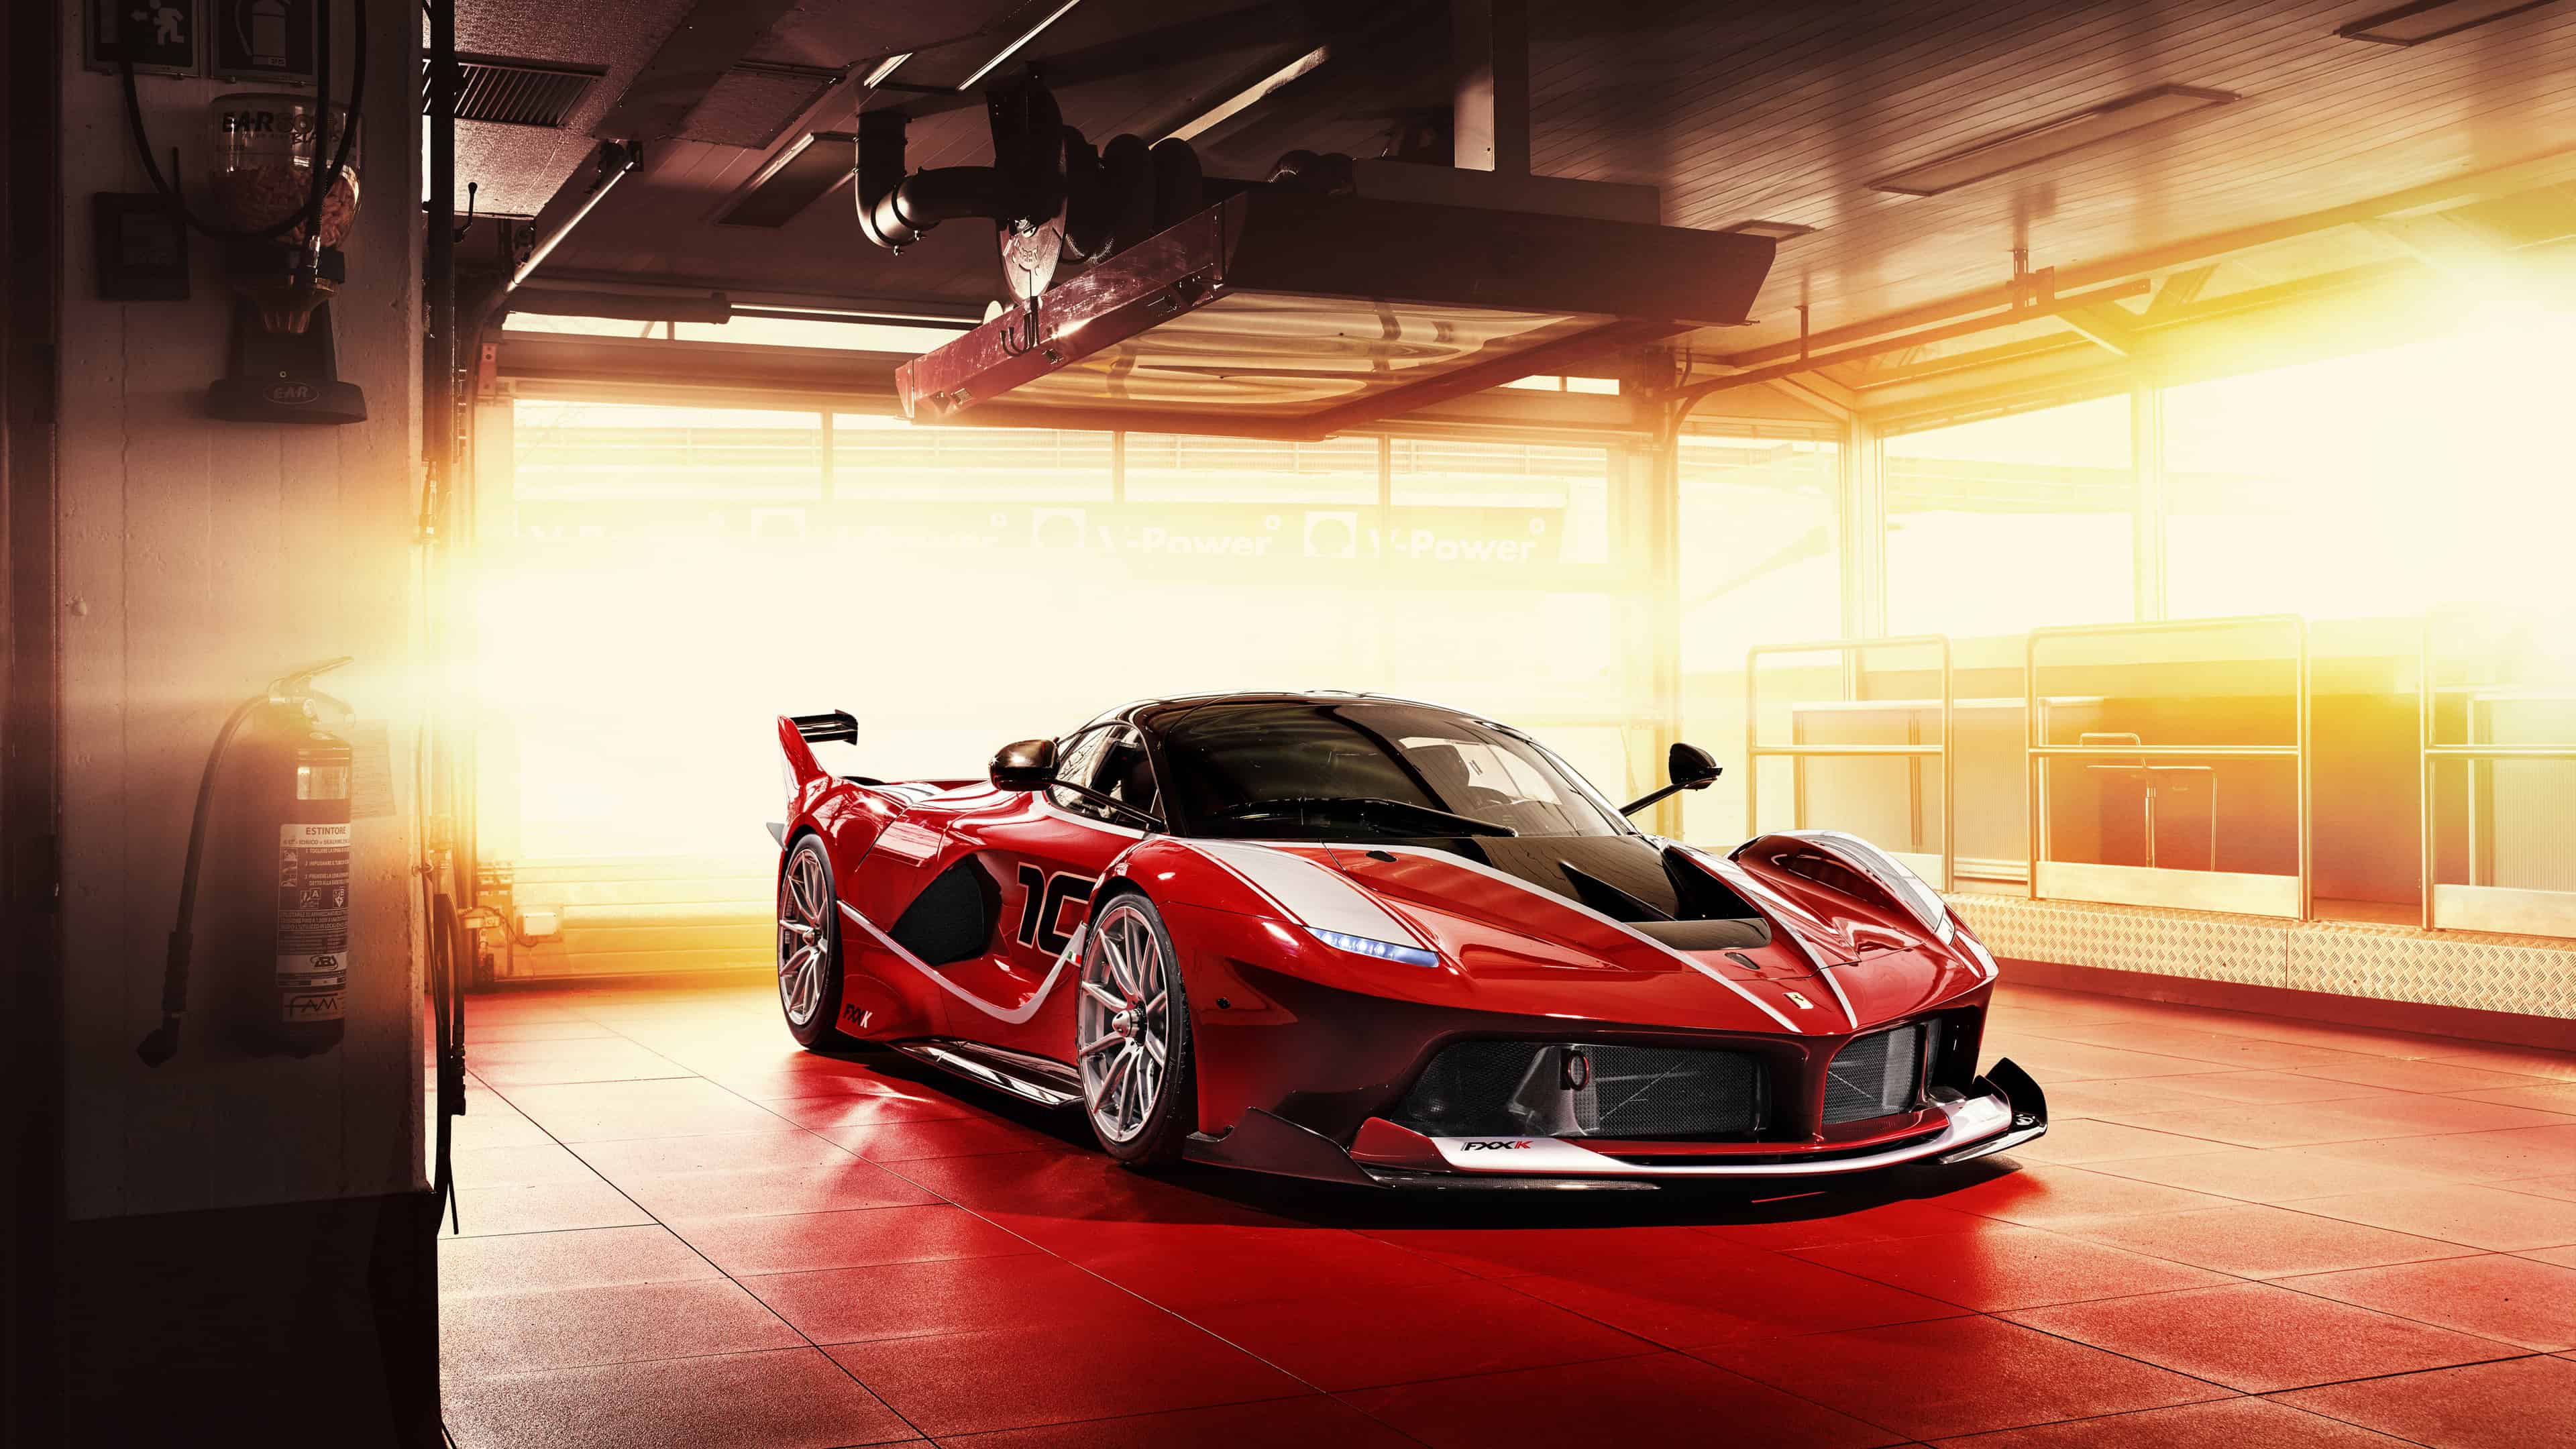 Ultra HD Ferrari Wallpapers - Top Free Ultra HD Ferrari Backgrounds